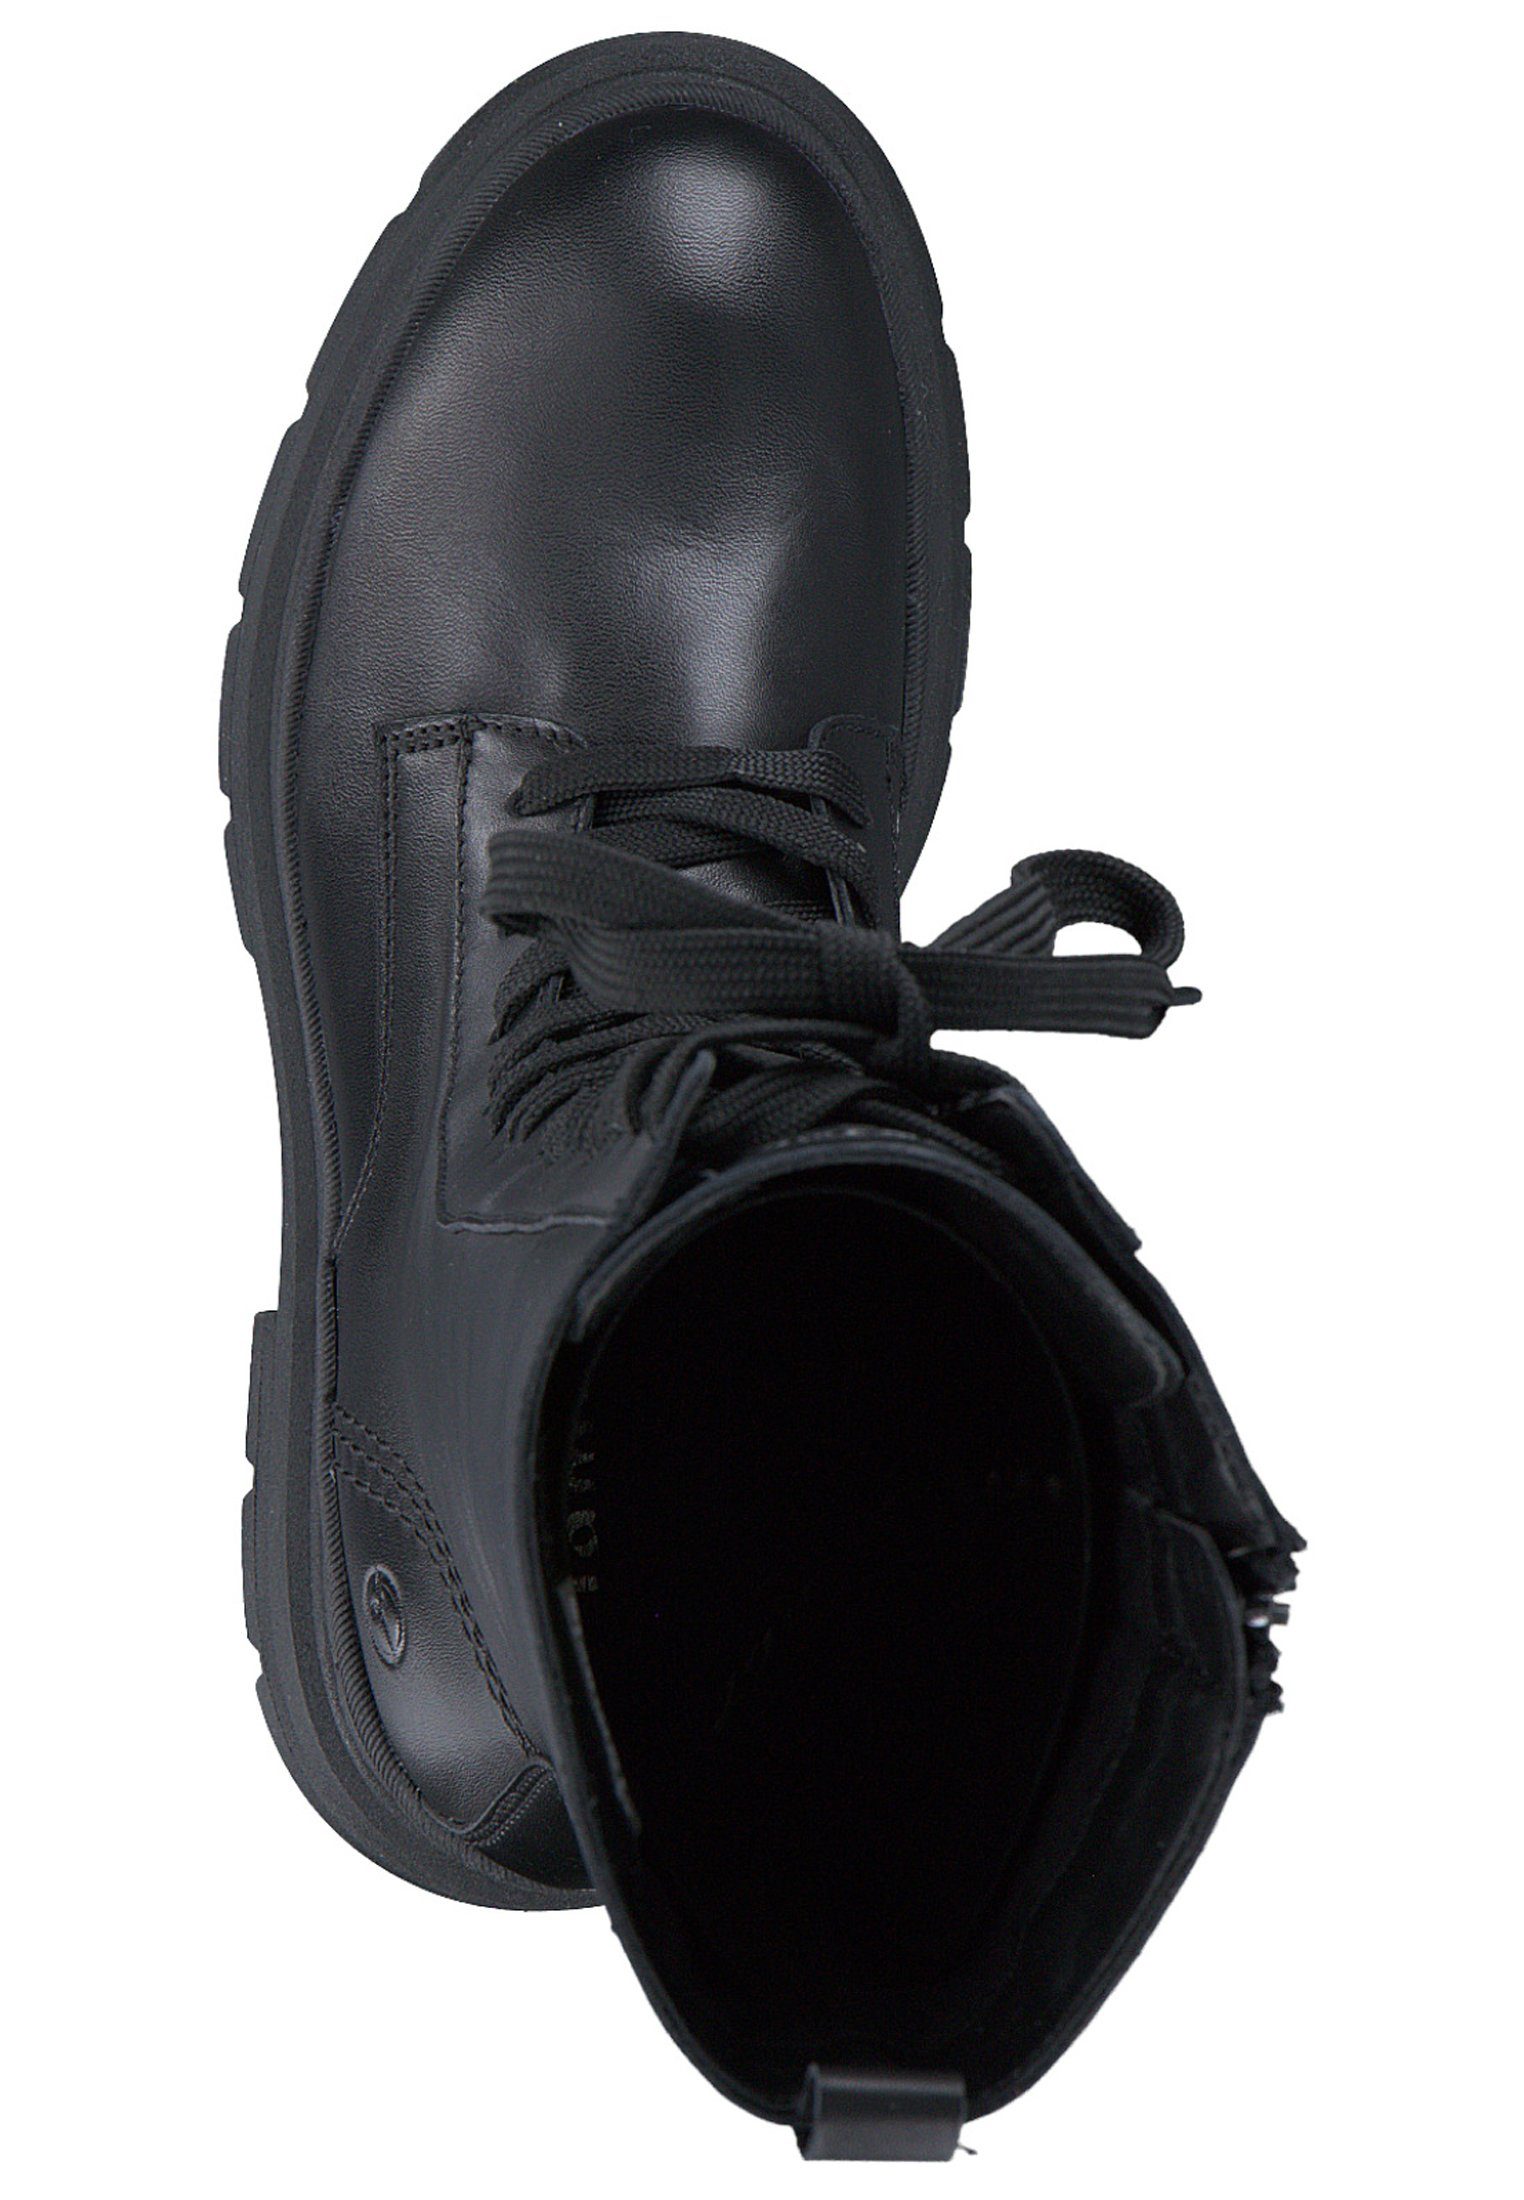 Tamaris 1-25212-29 LEATHER) Schwarz Stiefel (BLACK 003 Black Leather